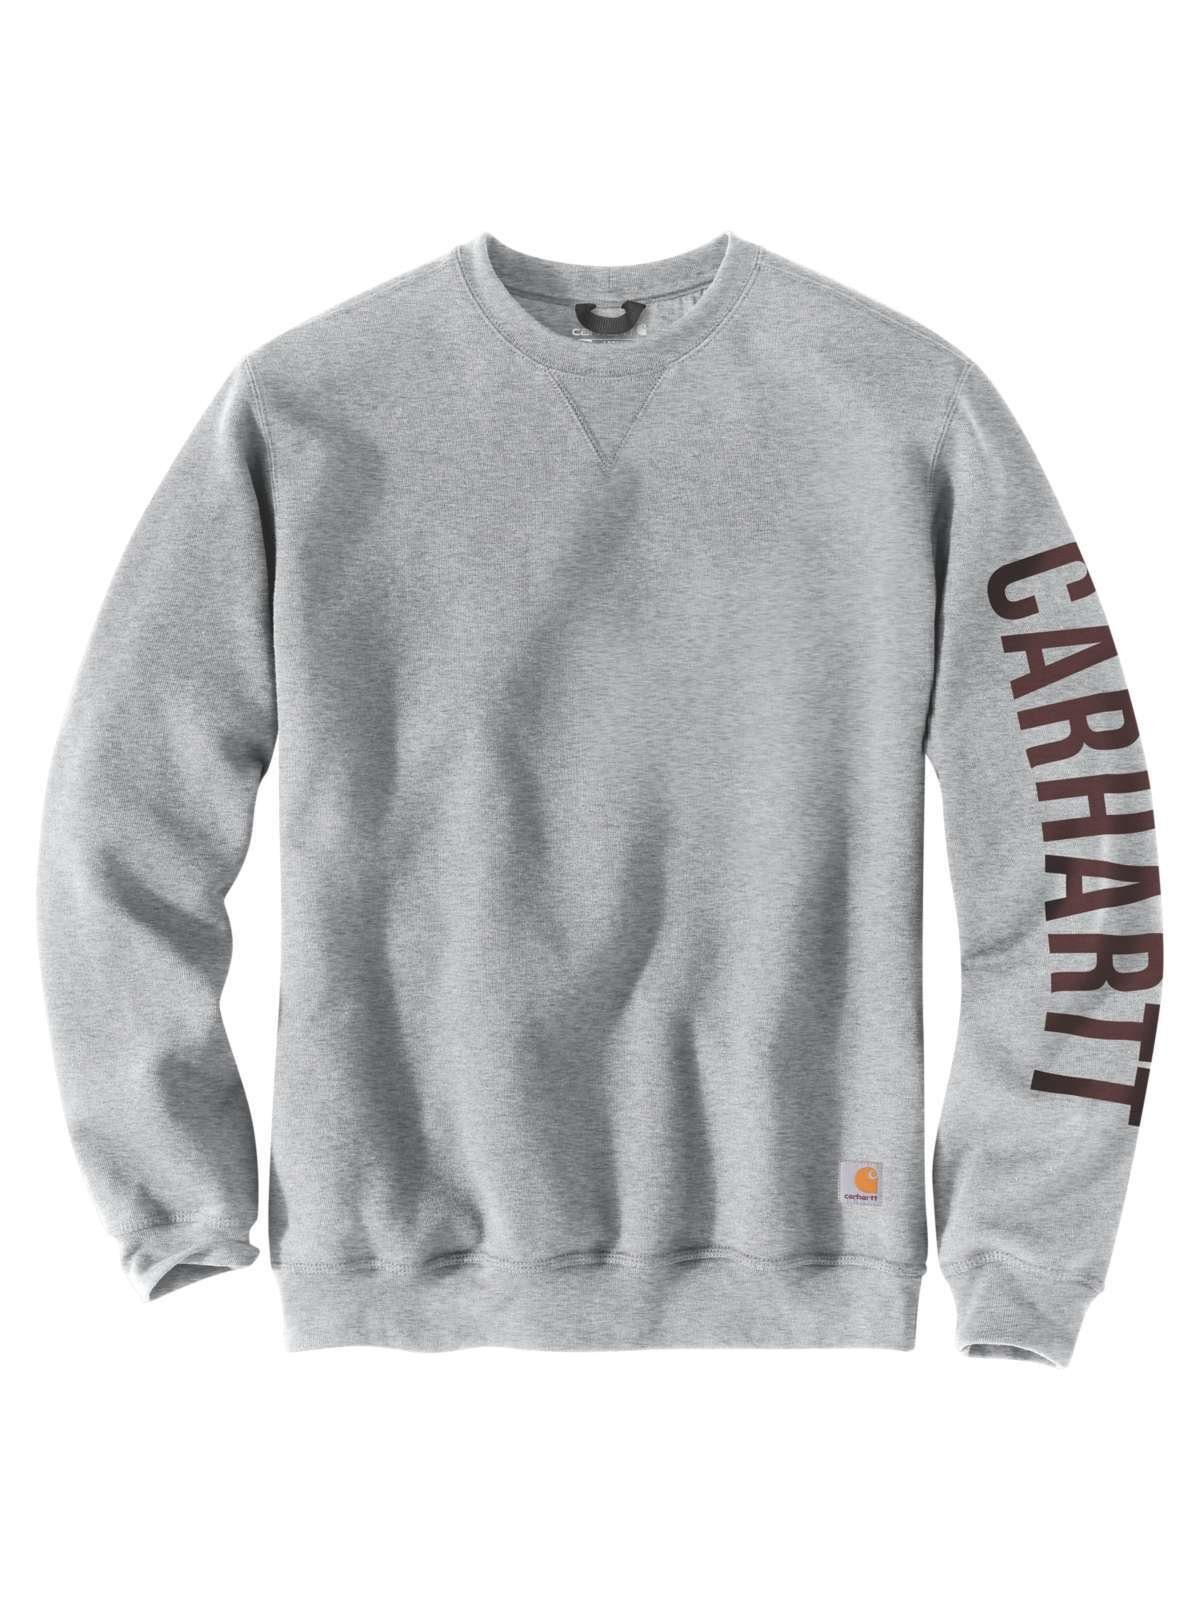 grey Graphic Carhartt Sweatshirt Logo Langarmshirt heather Carhartt Crewneck